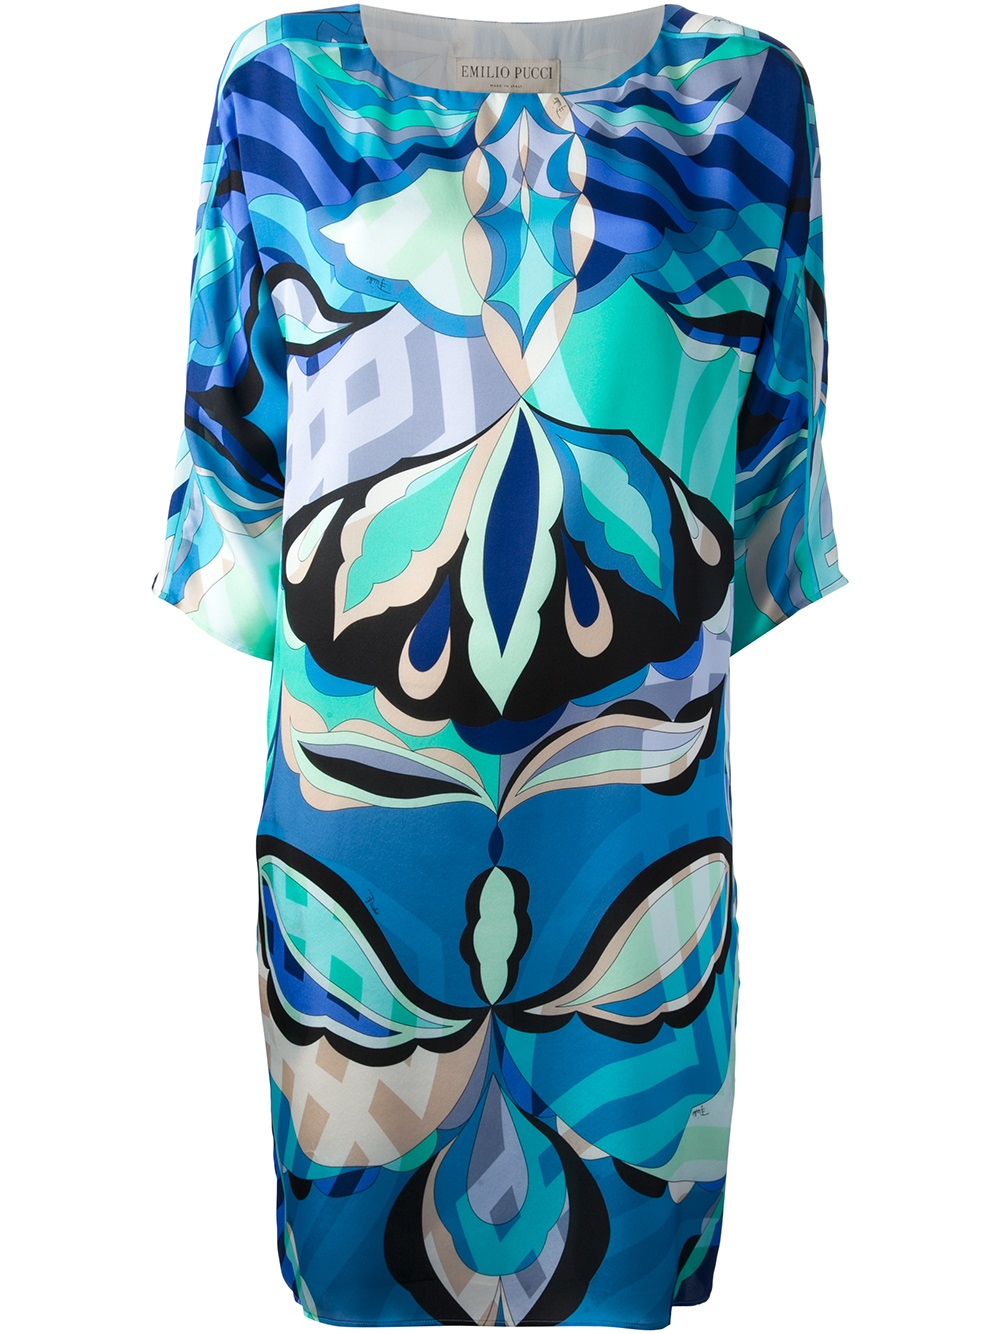 Lyst - Emilio Pucci Pattern Print Cocoon Dress in Blue